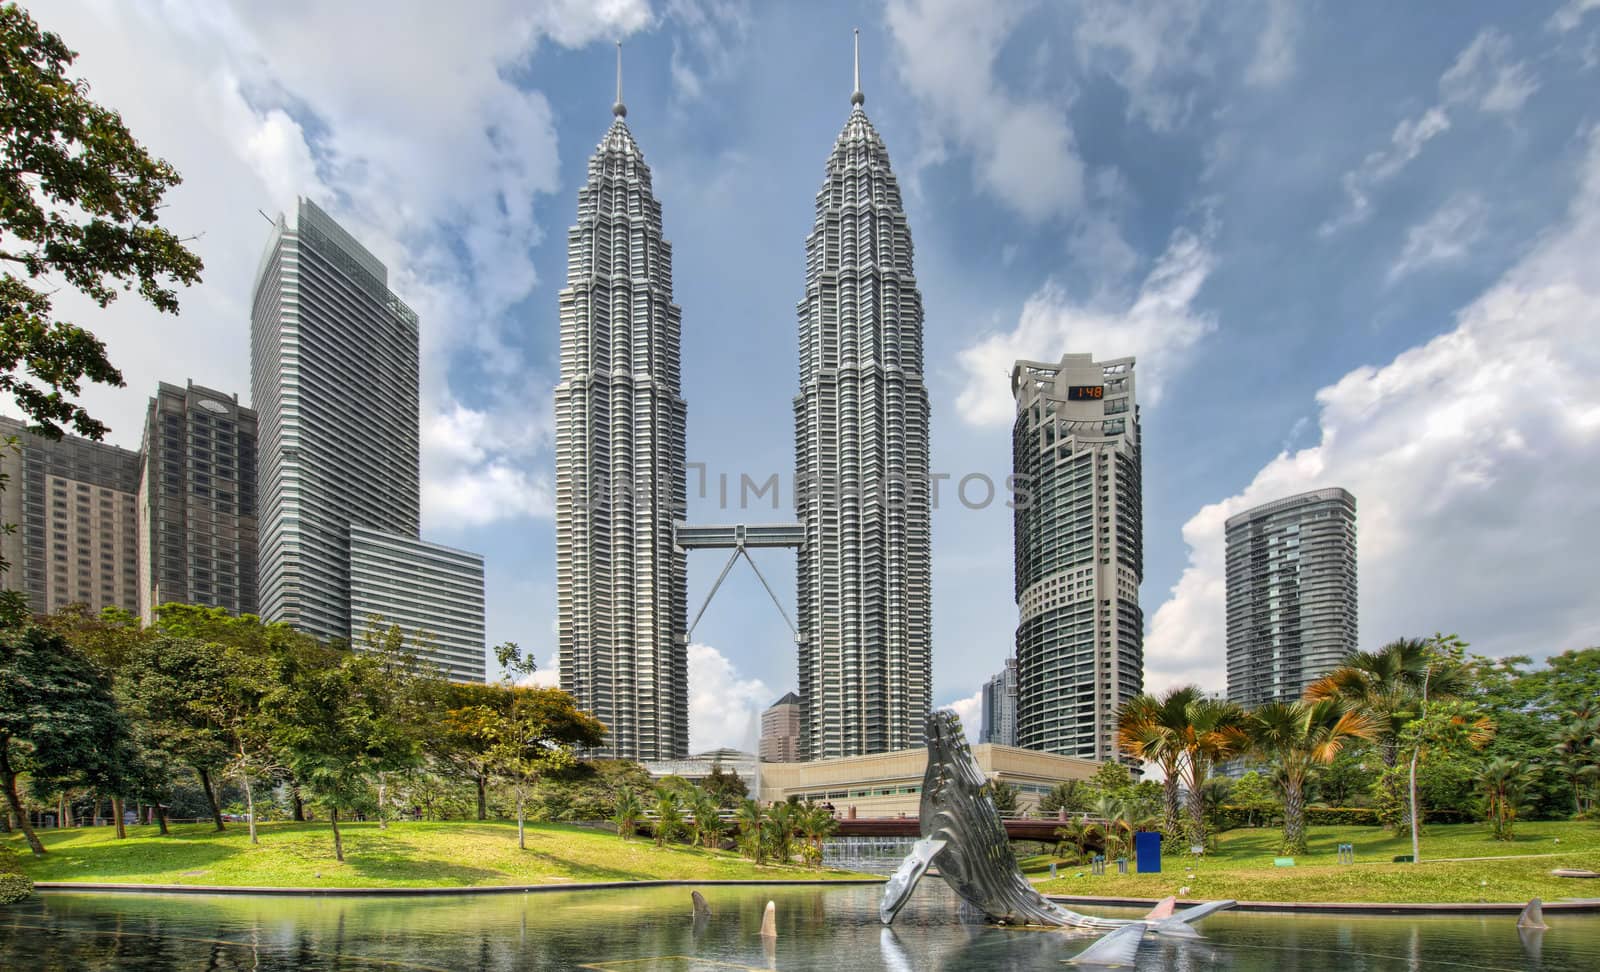 Kuala Lumpur City Skyline from KLCC Park by jpldesigns